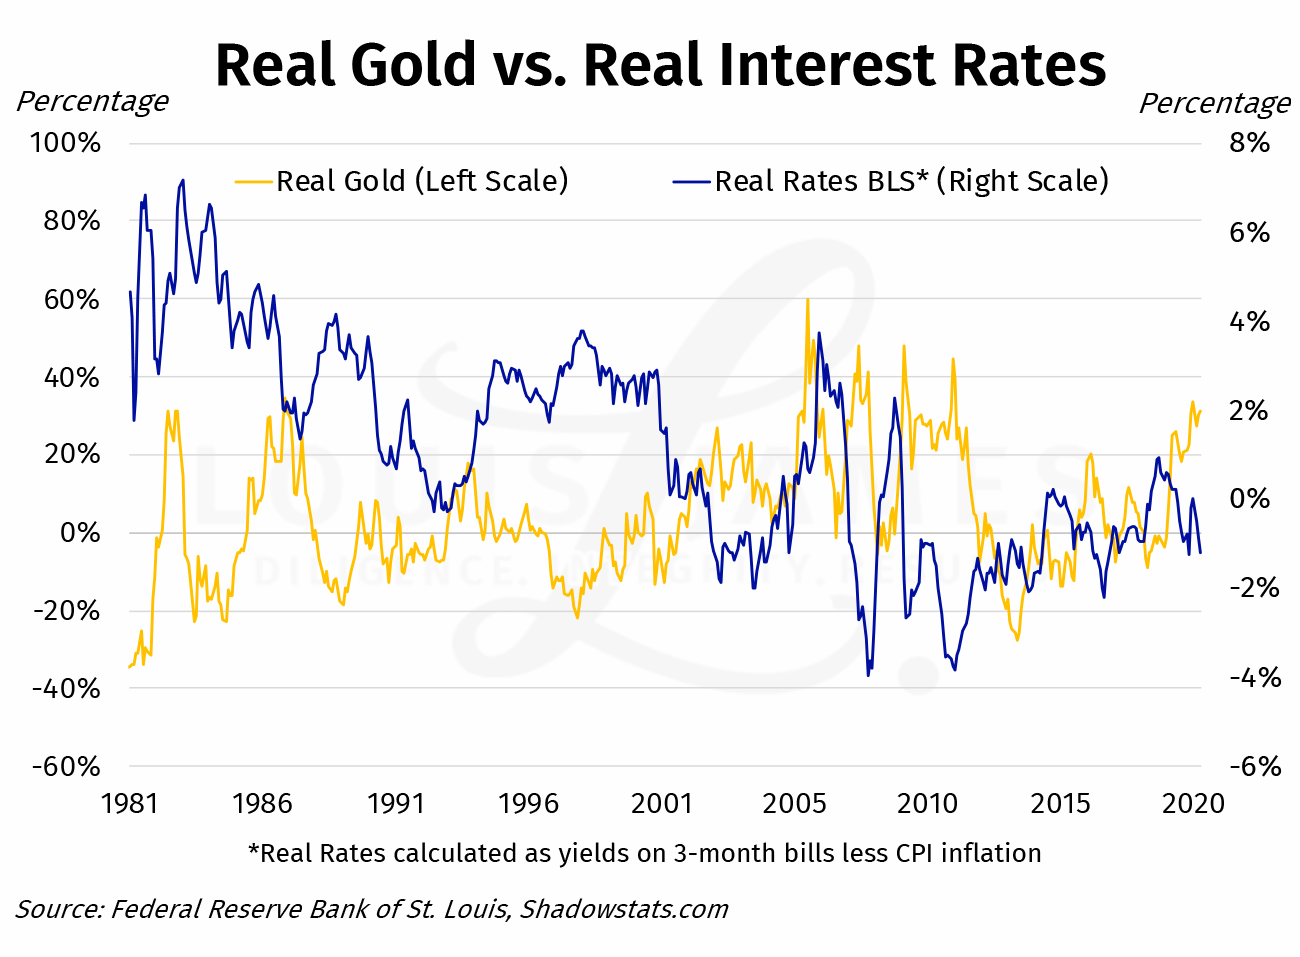 Real Gold vs Real Interest Rates BLS